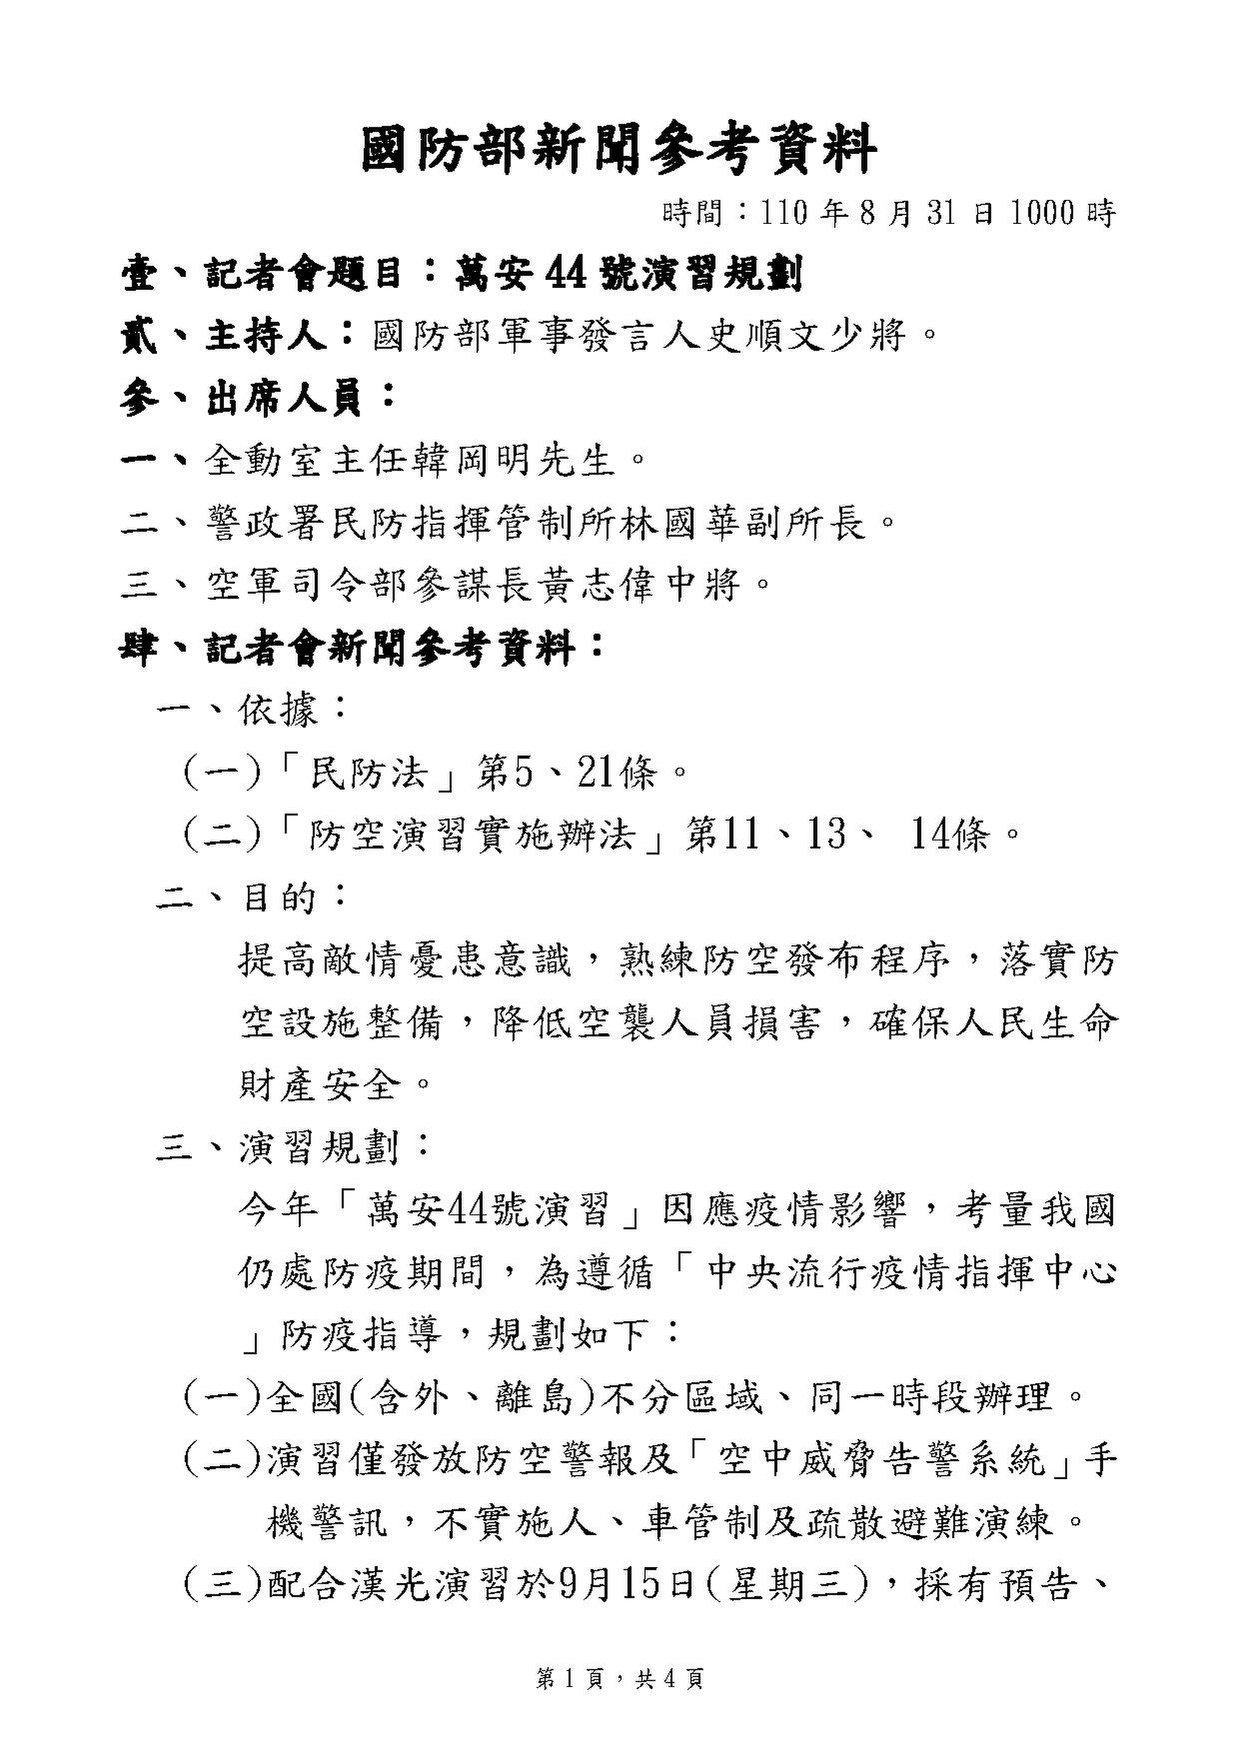 File:國防部新聞參考資料萬安44號演習規劃.pdf - Wikimedia Commons